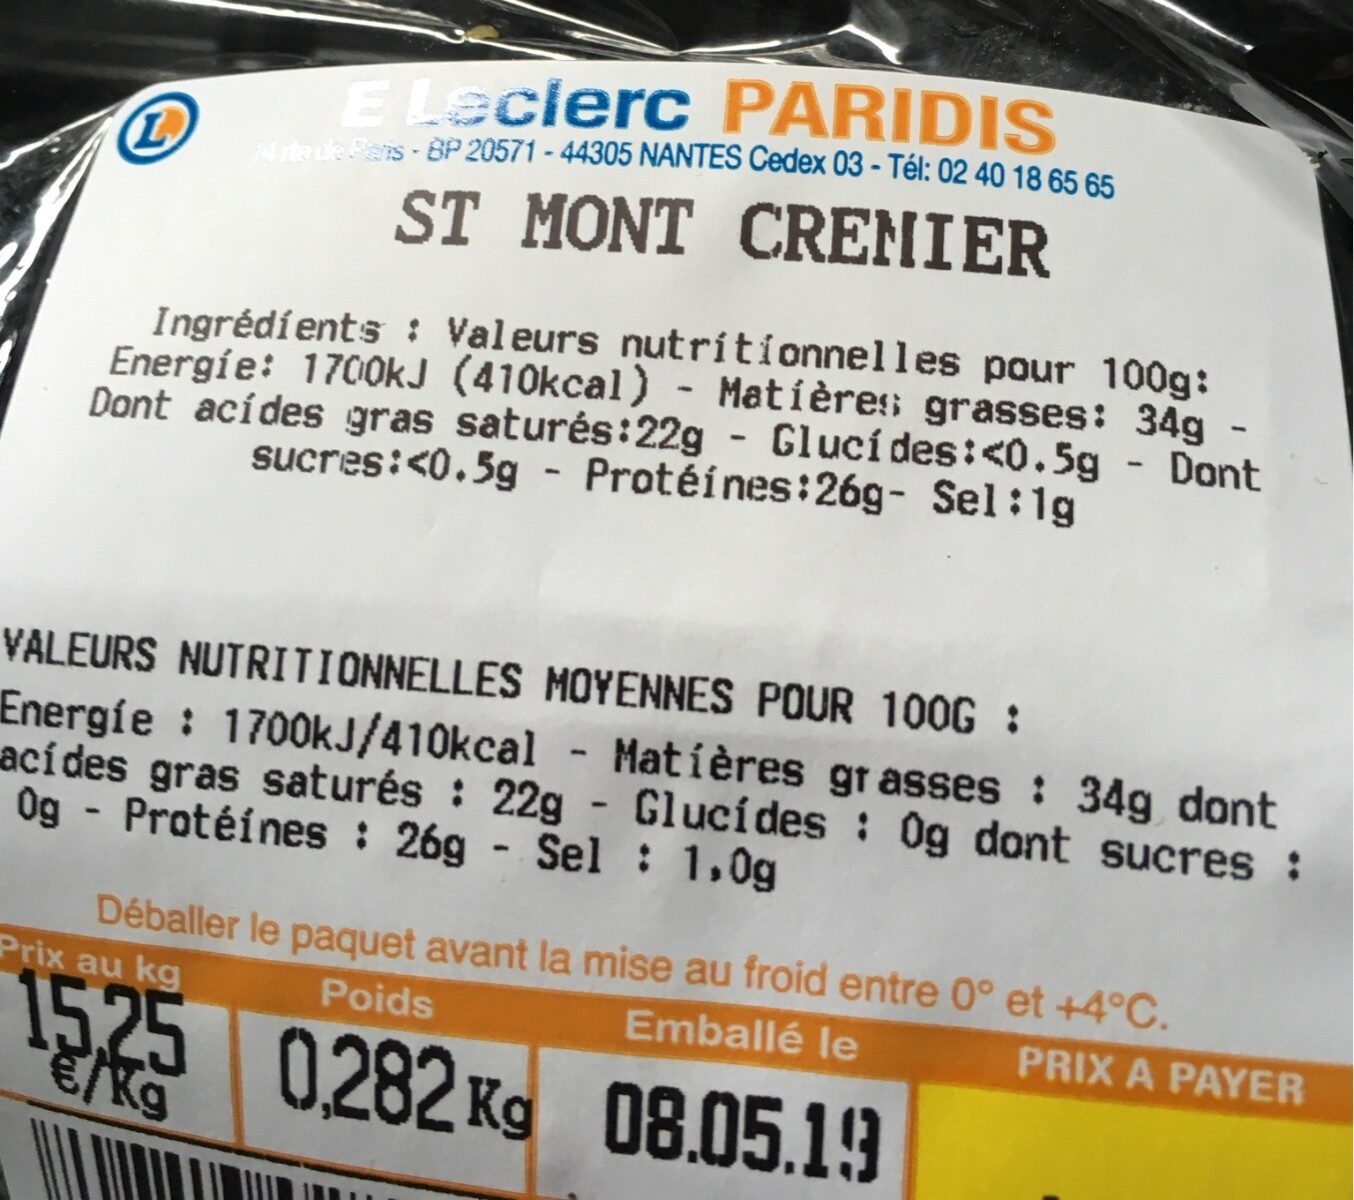 St mont cremier - Ingredients - fr